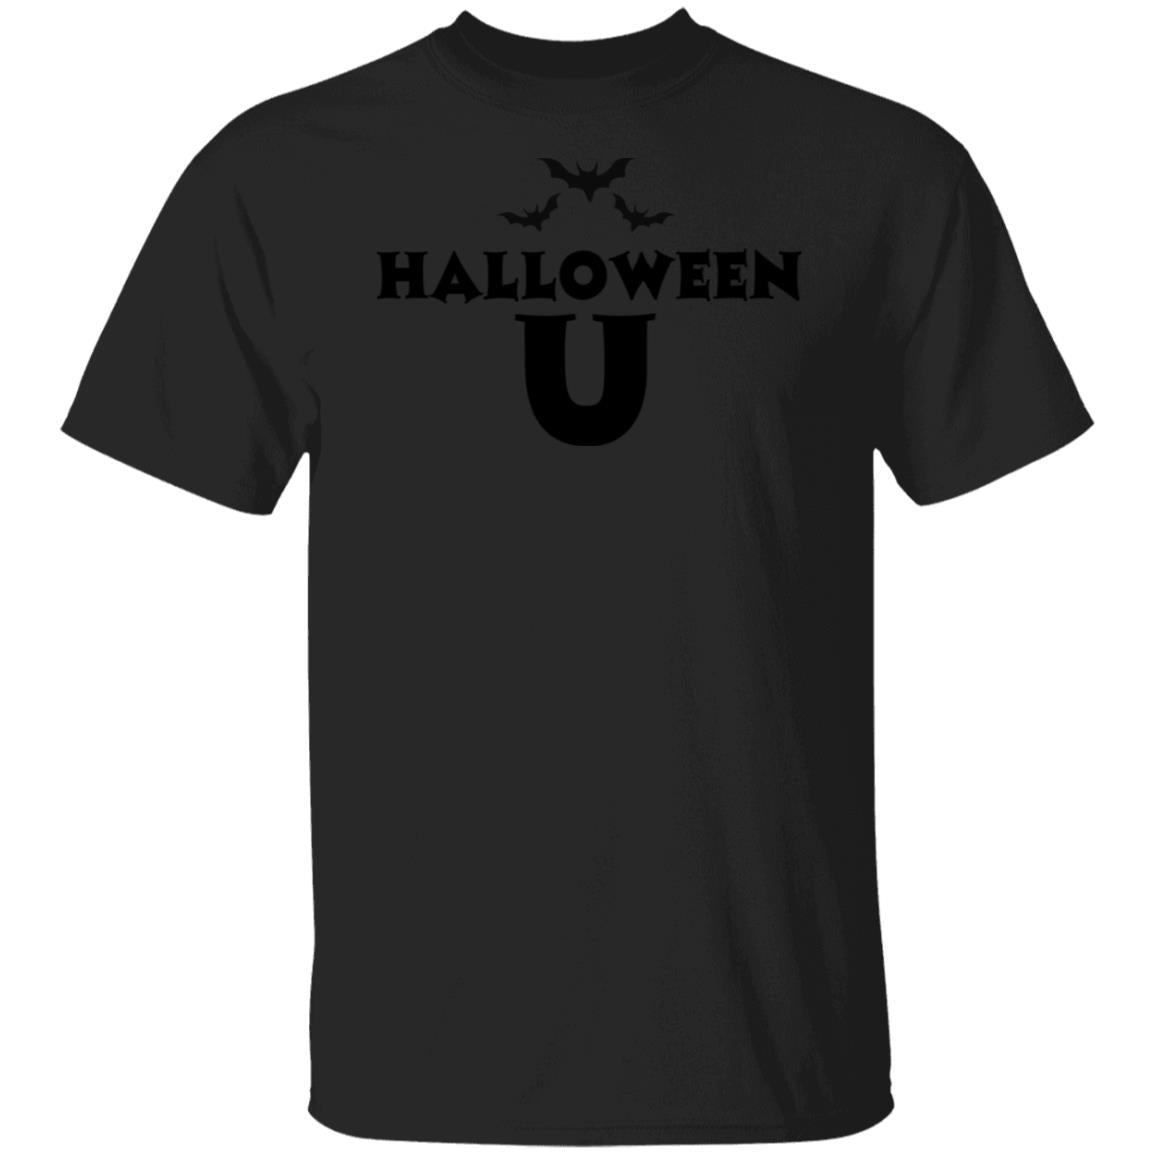 Halloween U T Shirt